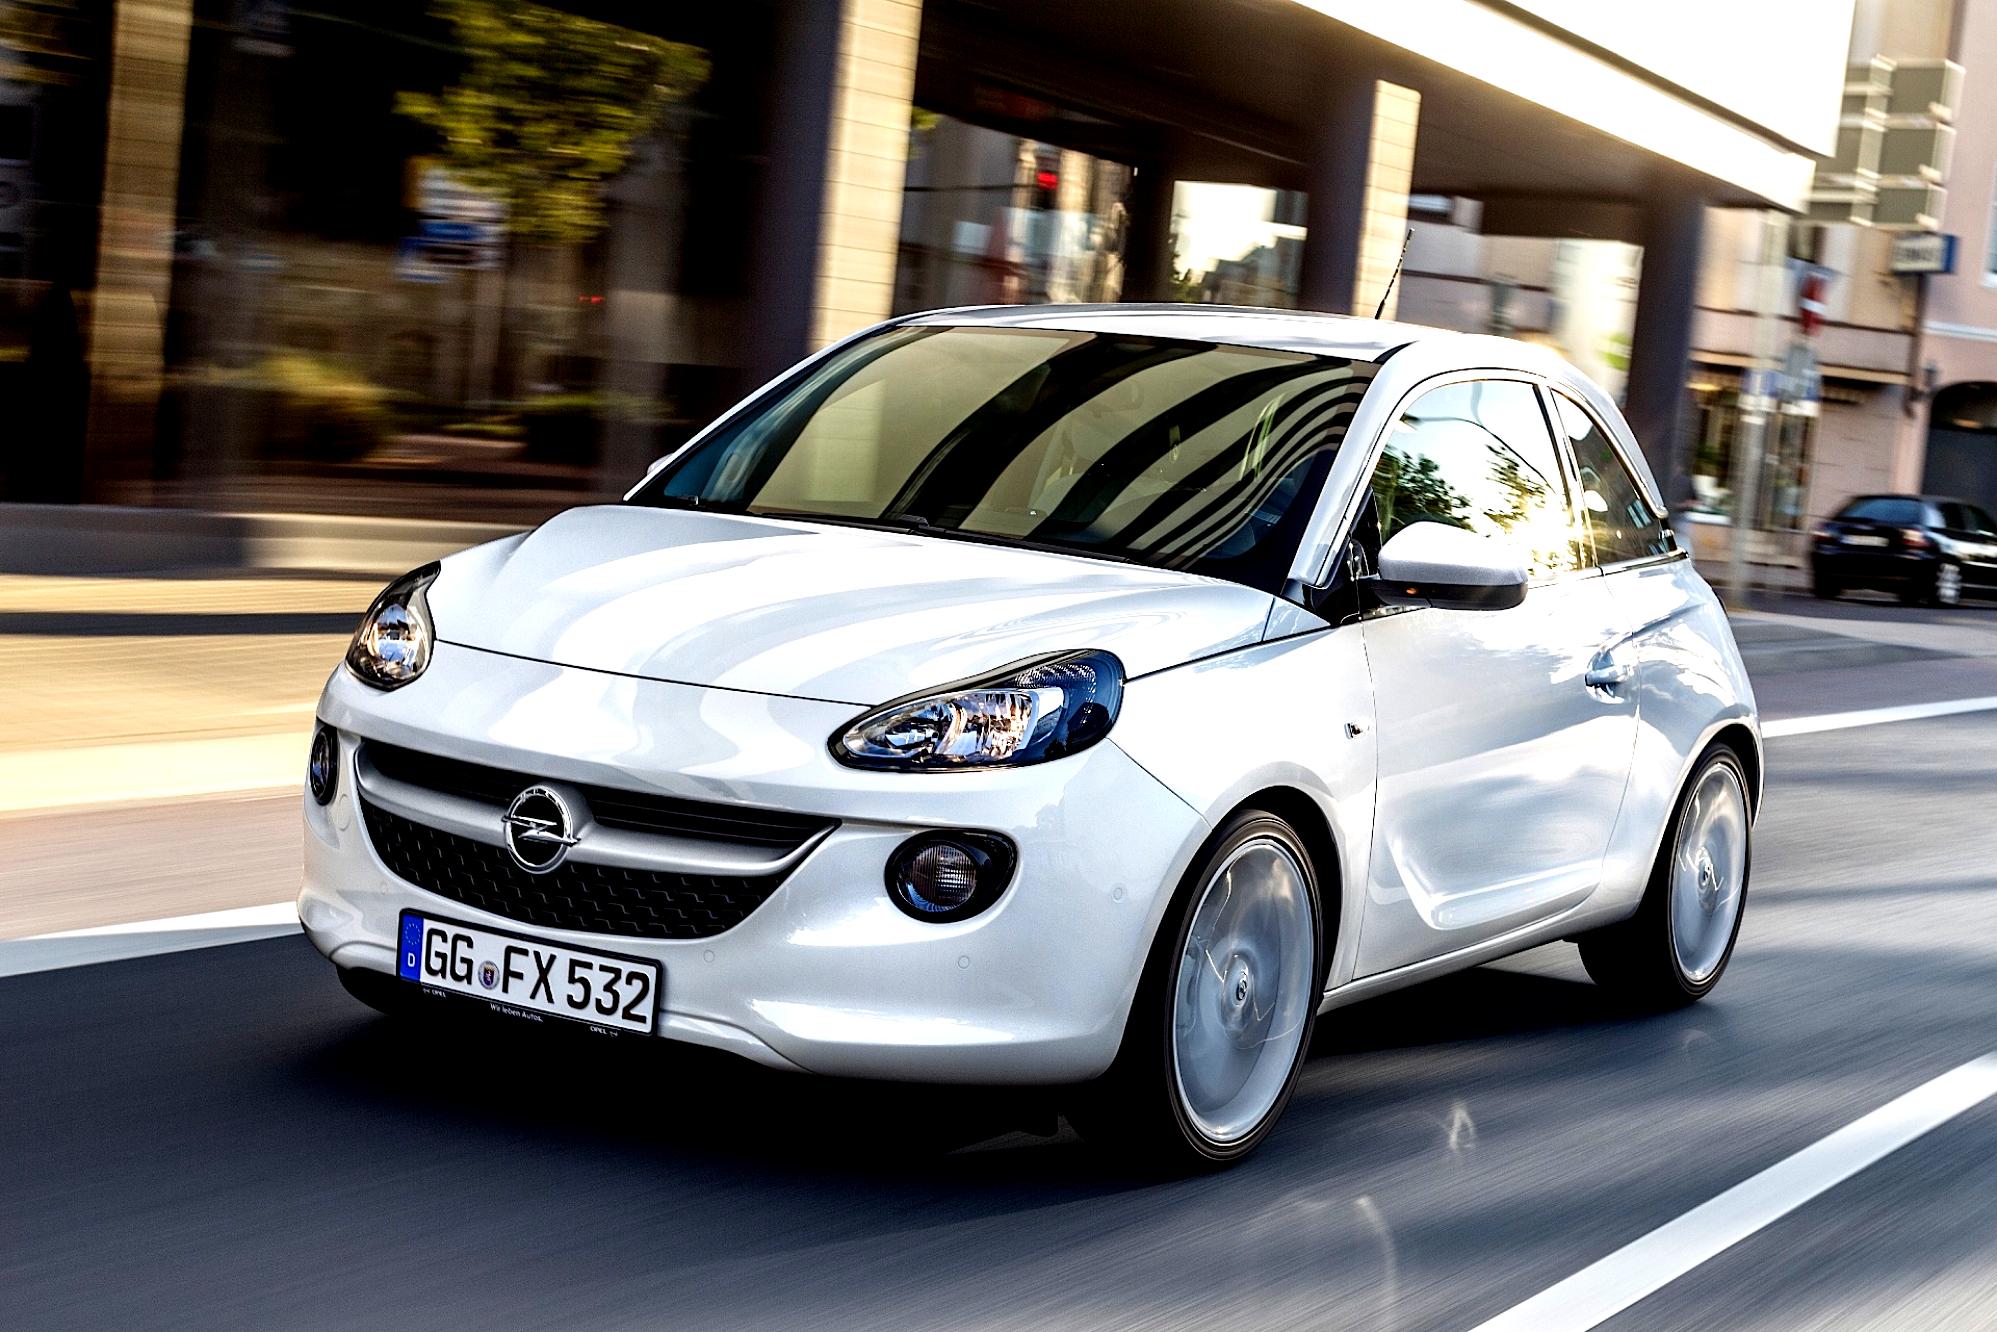 Opel Adam 2013 #33